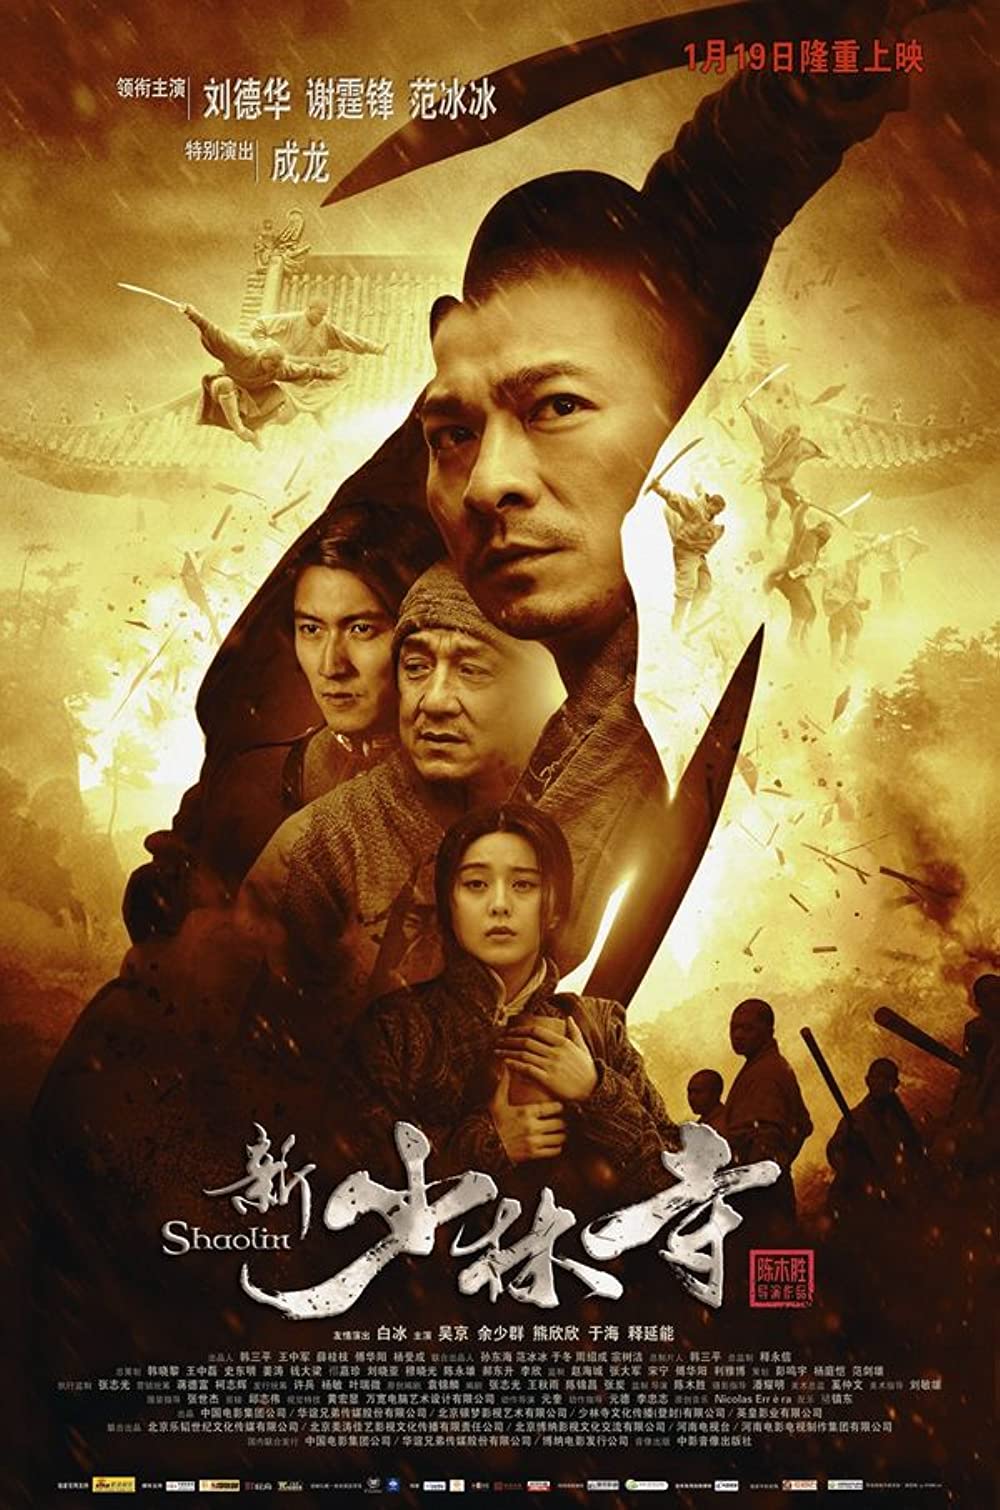 Shaolin (Xin Shao Lin si) (2011) เส้าหลิน สองใหญ่